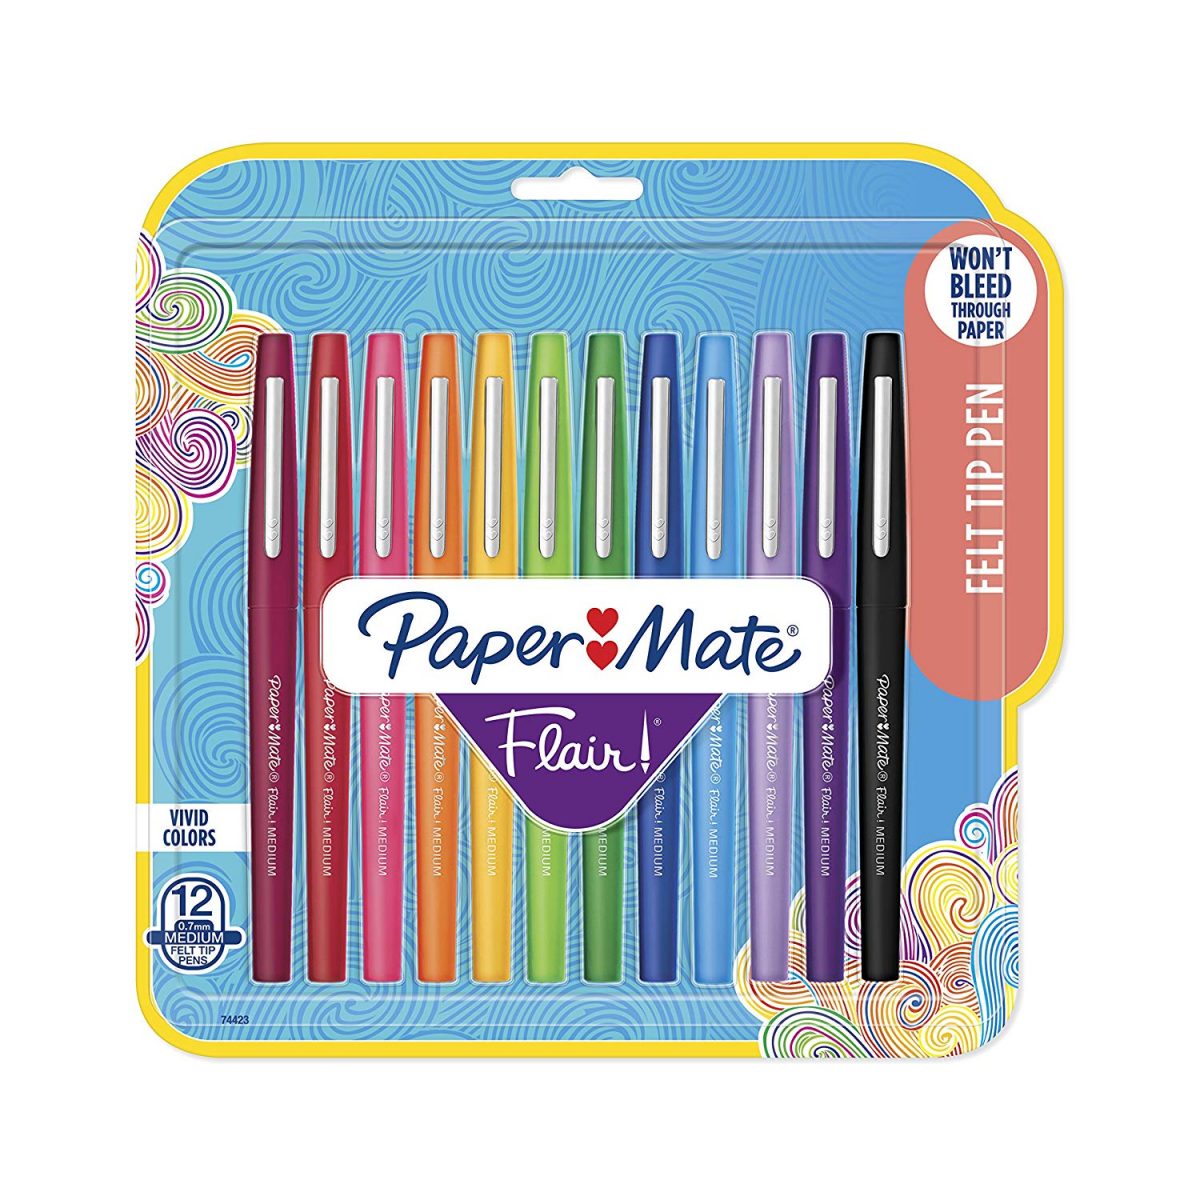 papermate pens